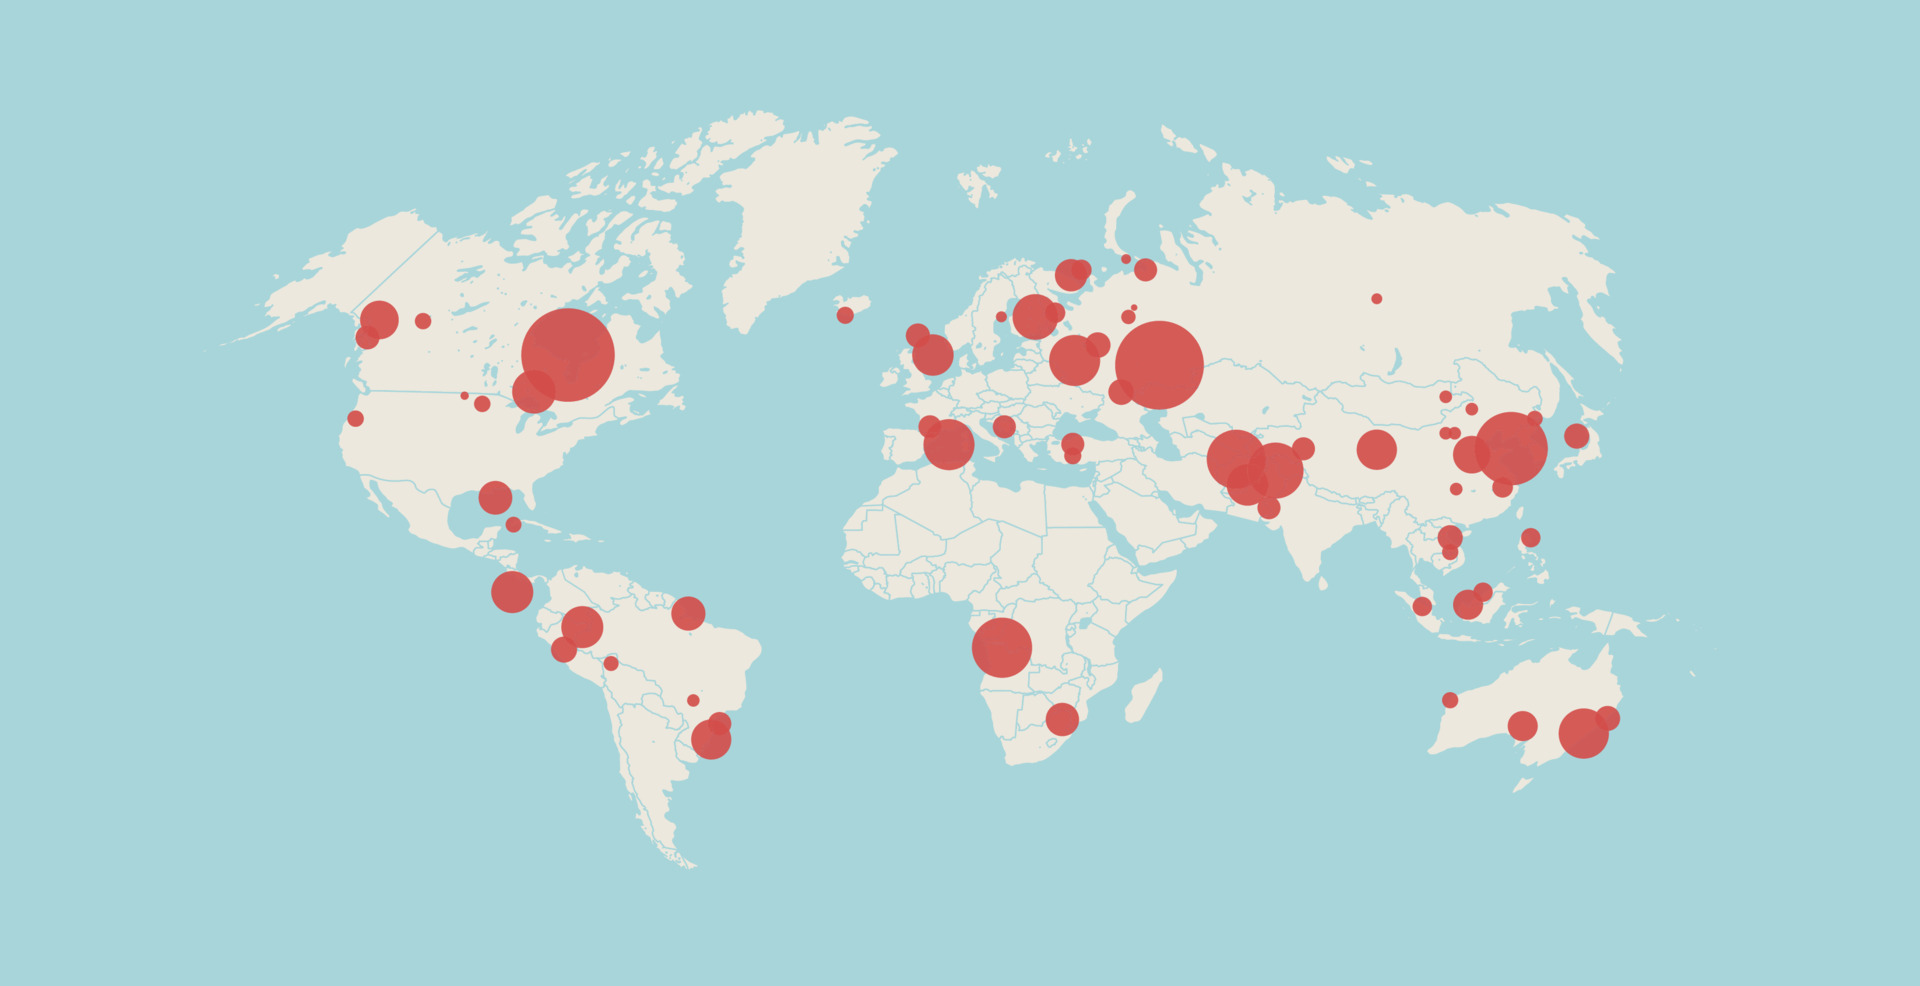 Worldwide locations